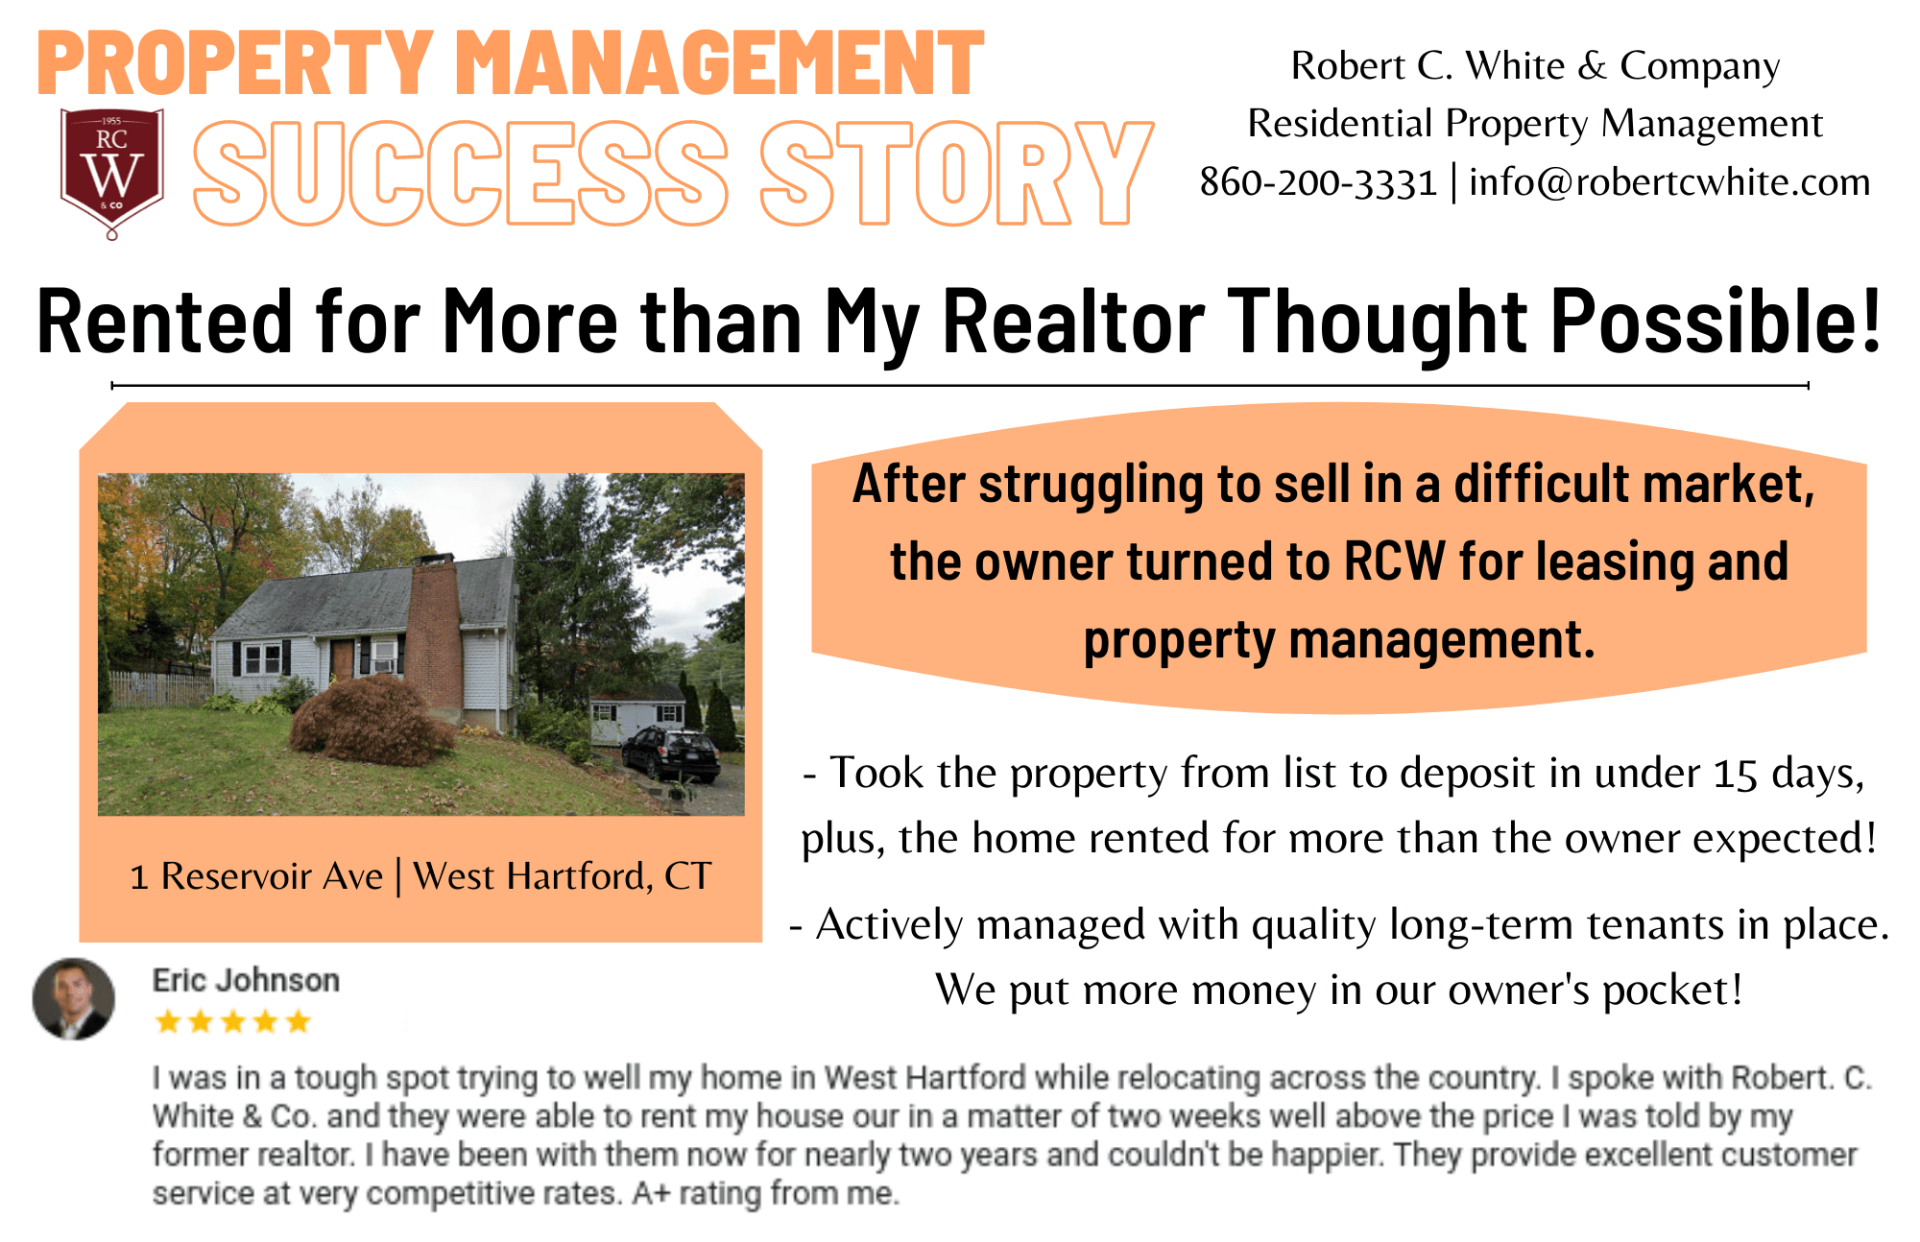 Property management success story - Eric